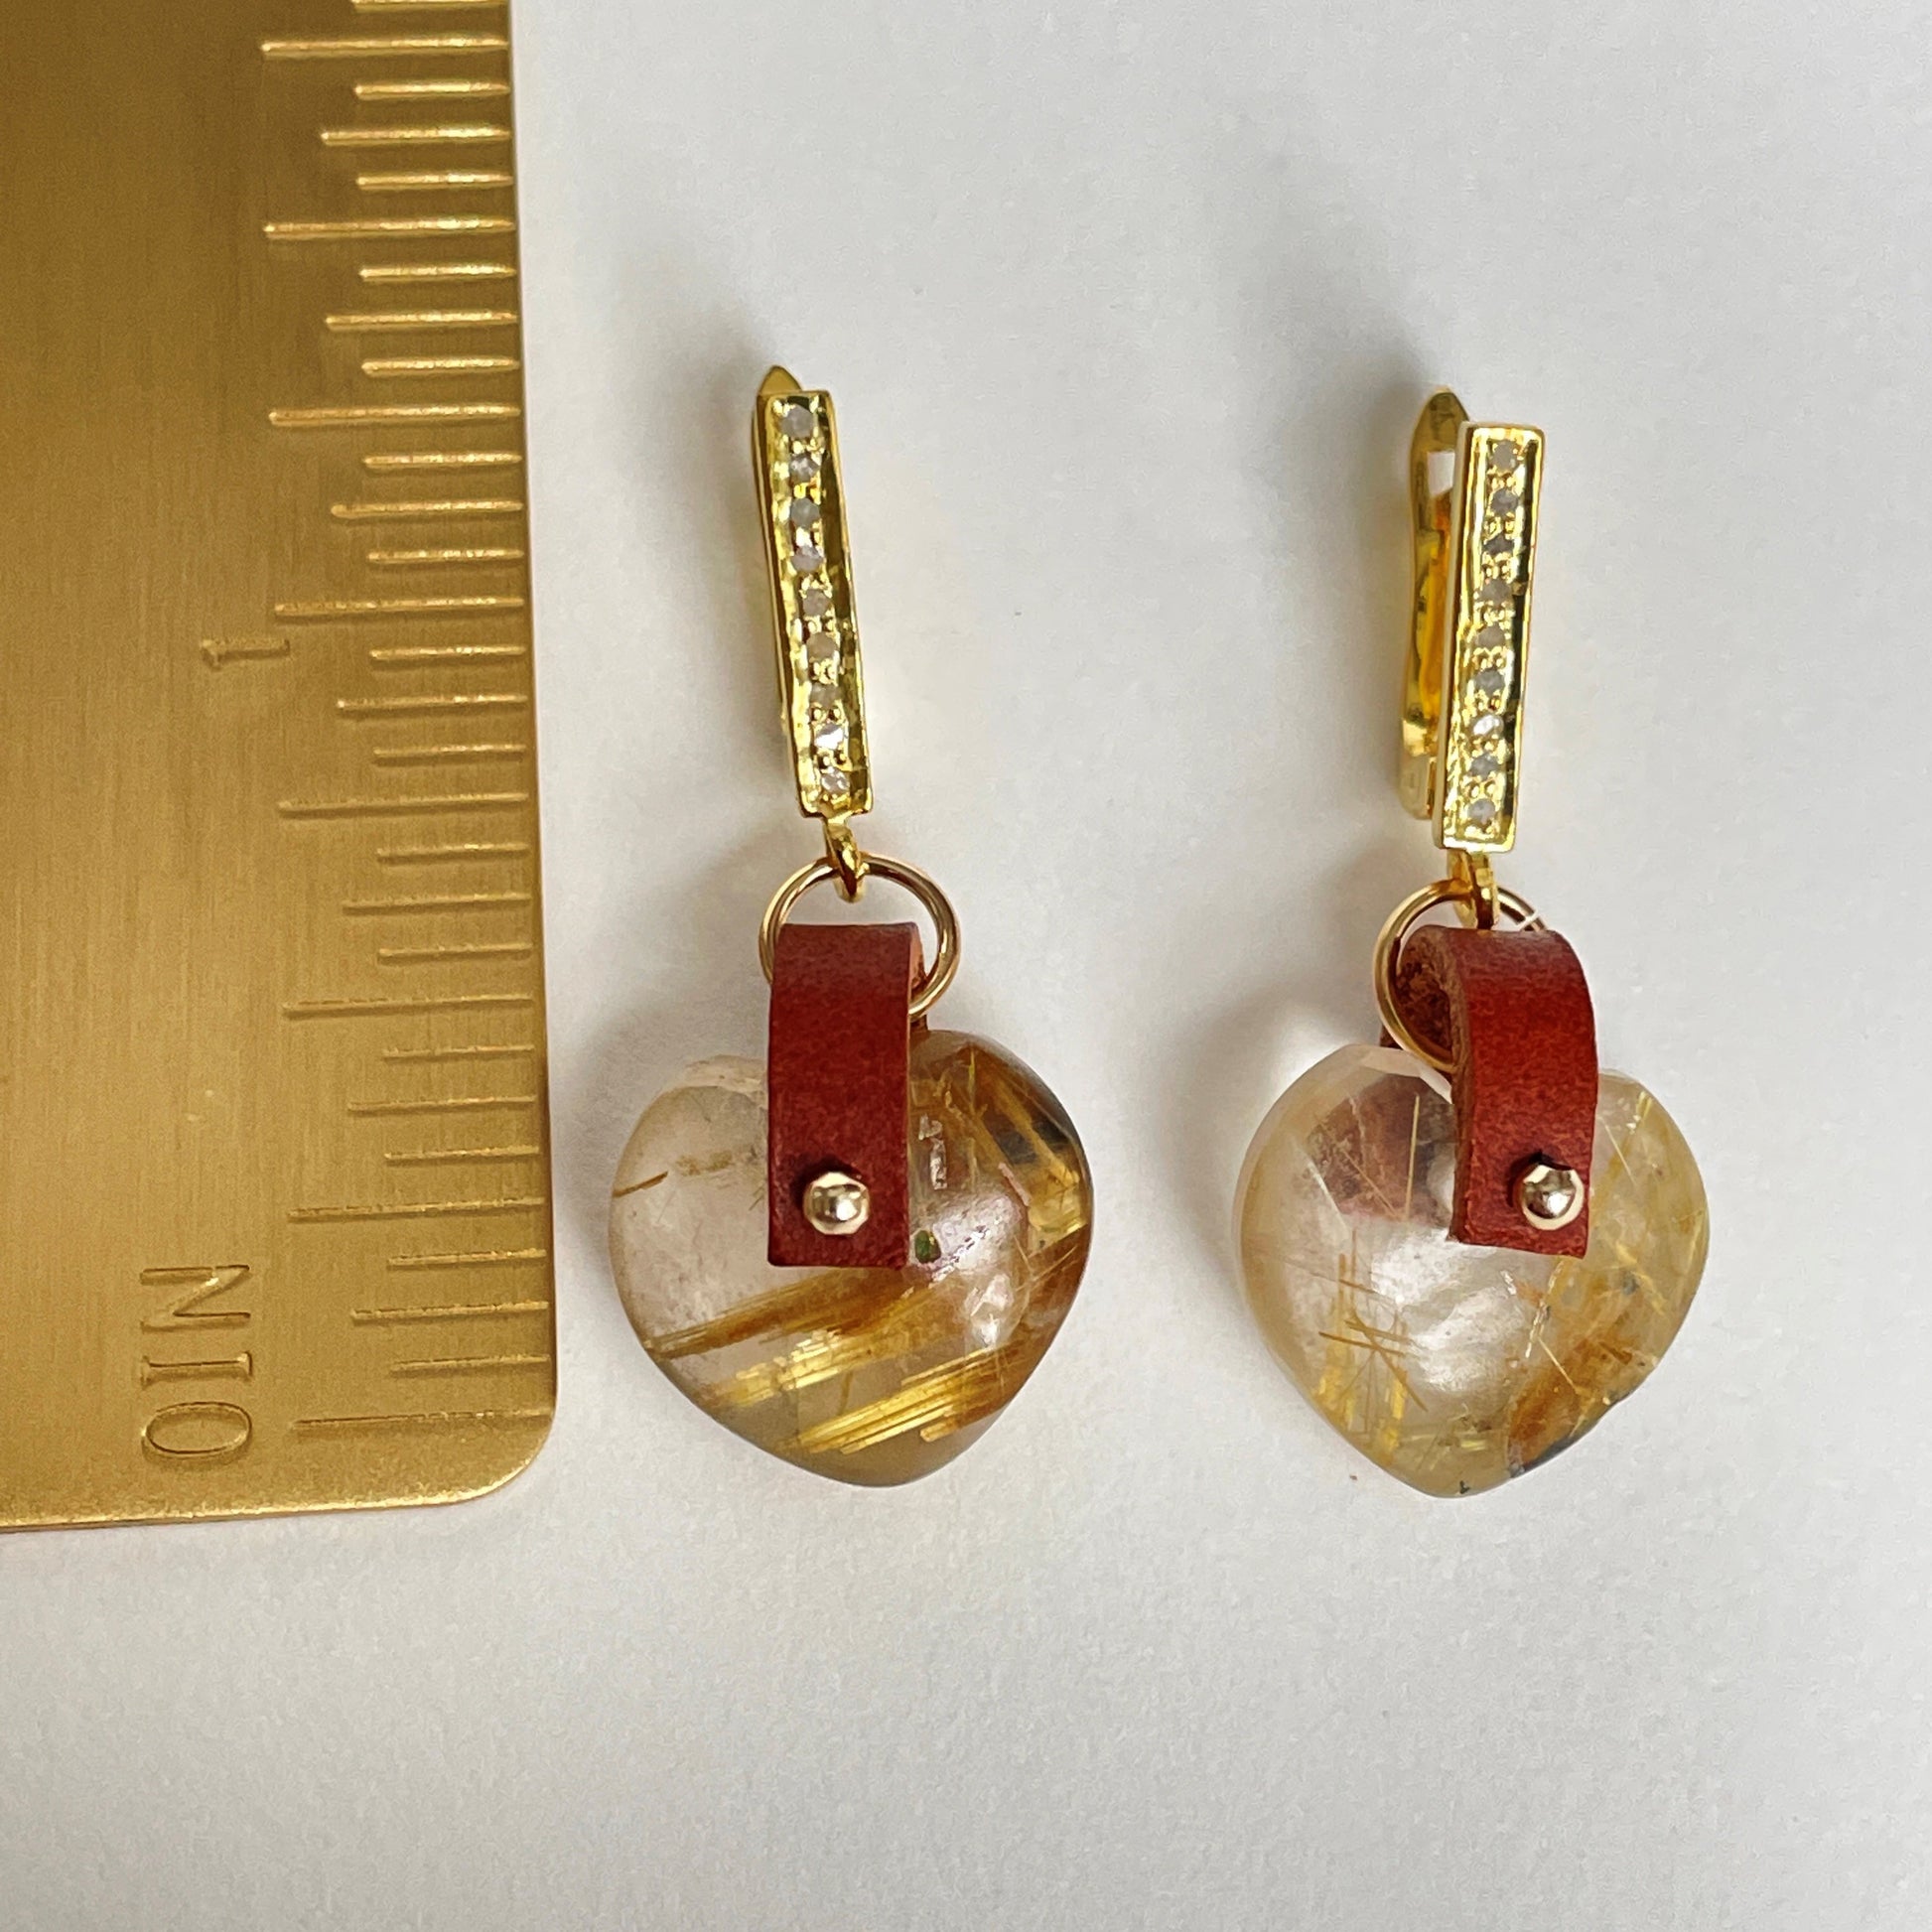 Beautiful, unique gold earrings